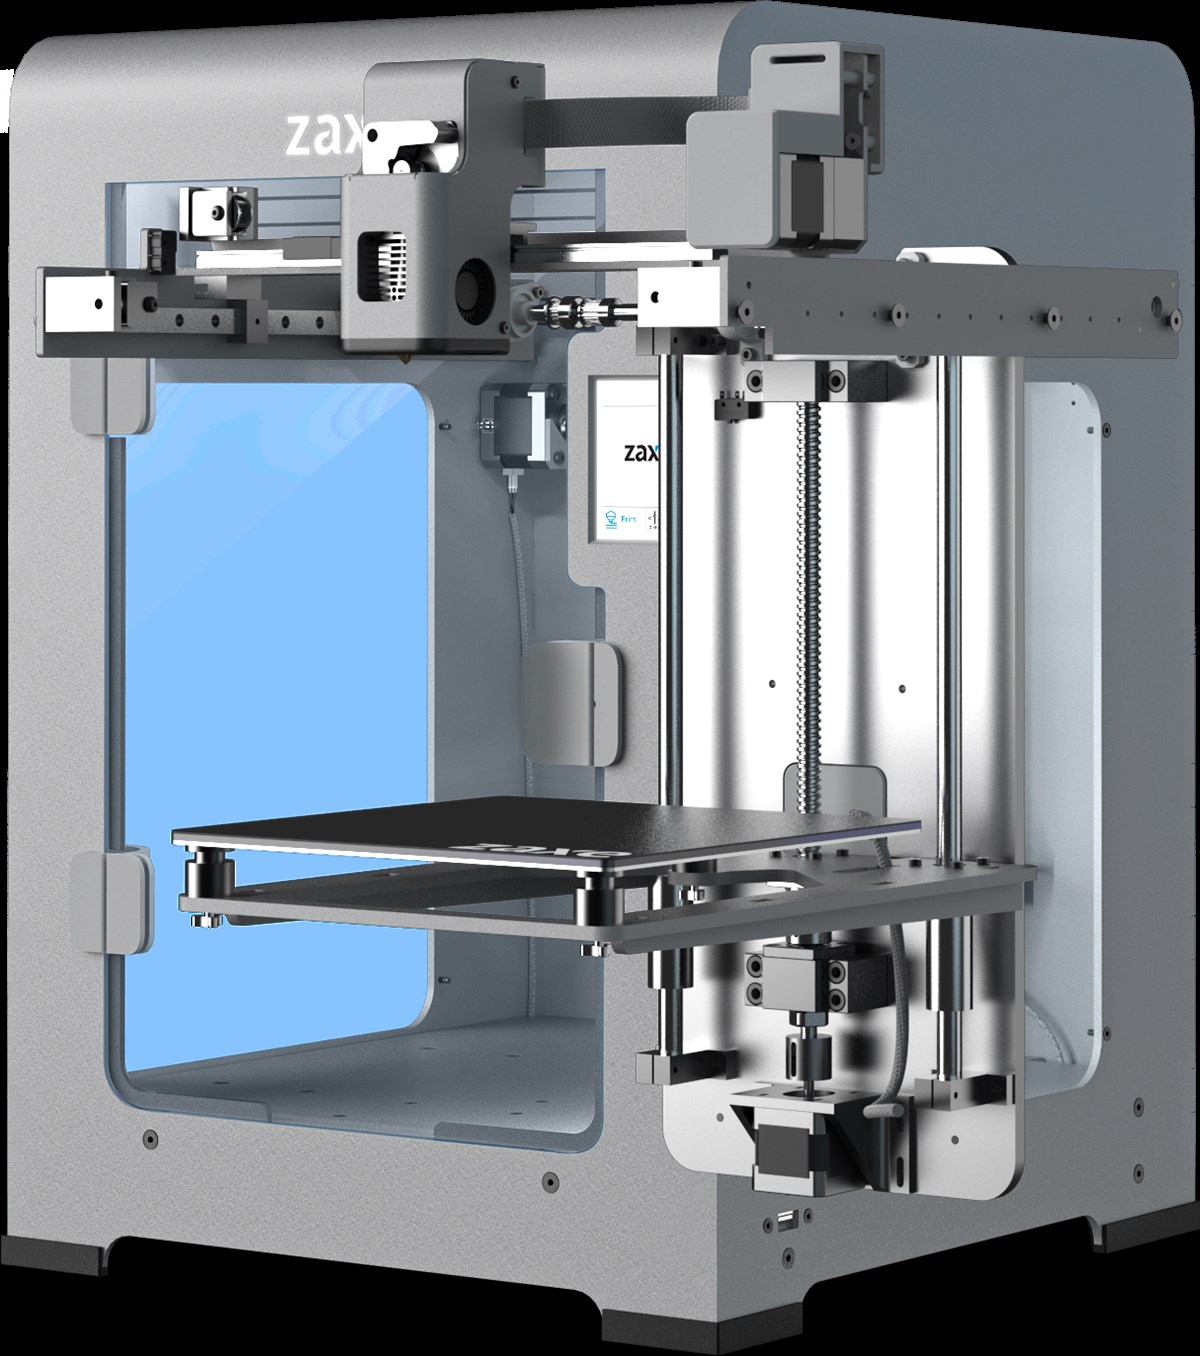 Zaxe Z1 3D Printer (Worldwide Free Shipping with Fedex)